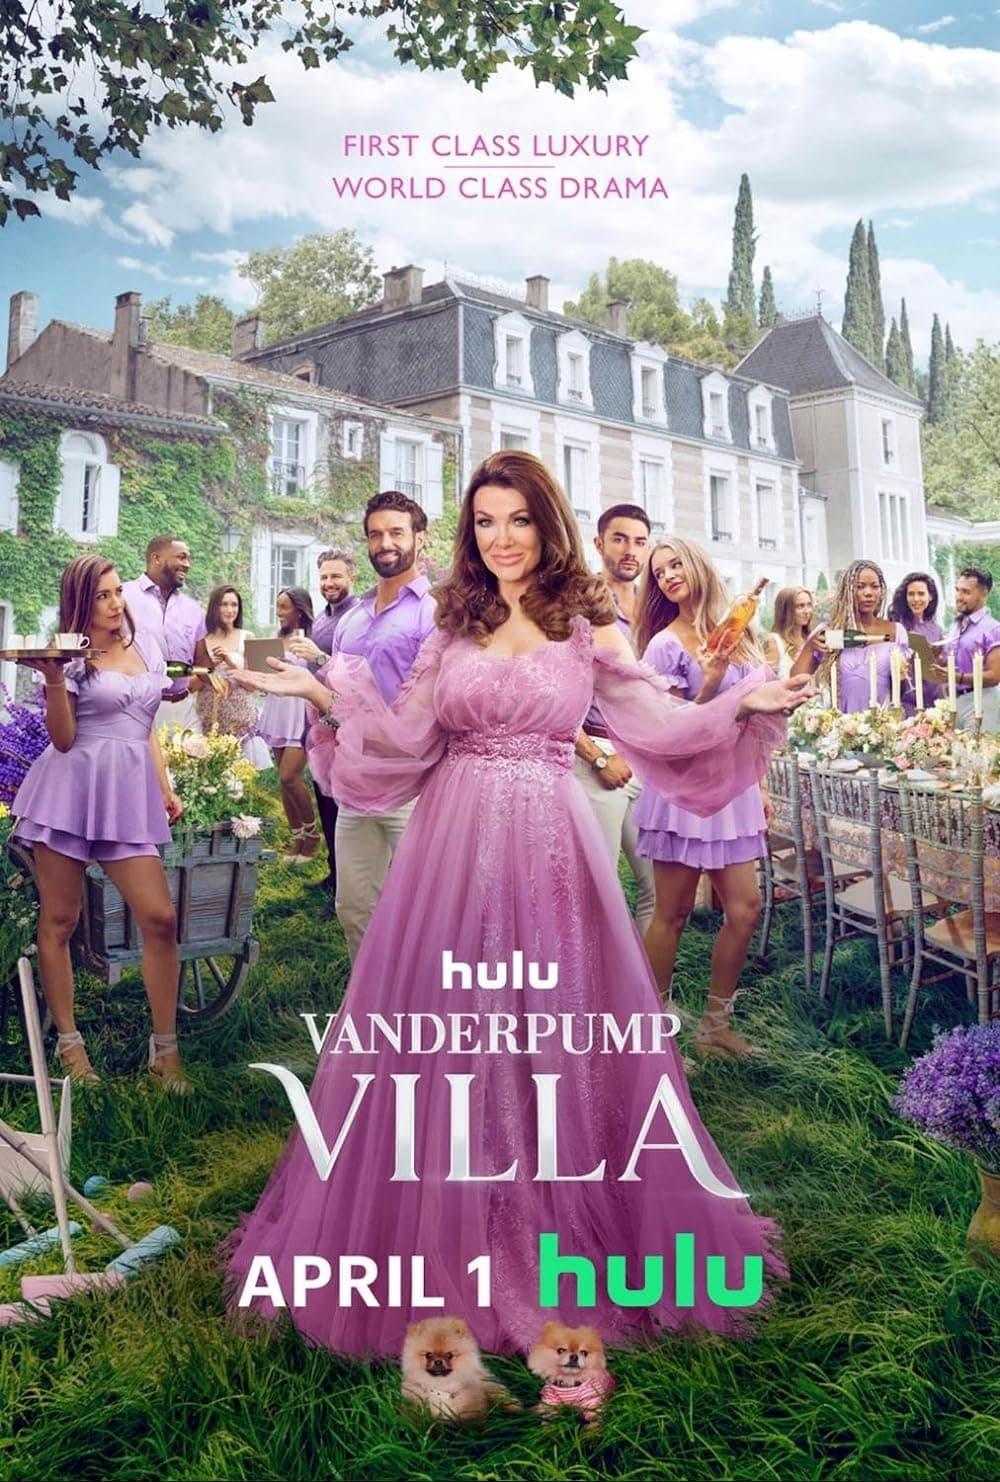 Vanderpump Villa poster